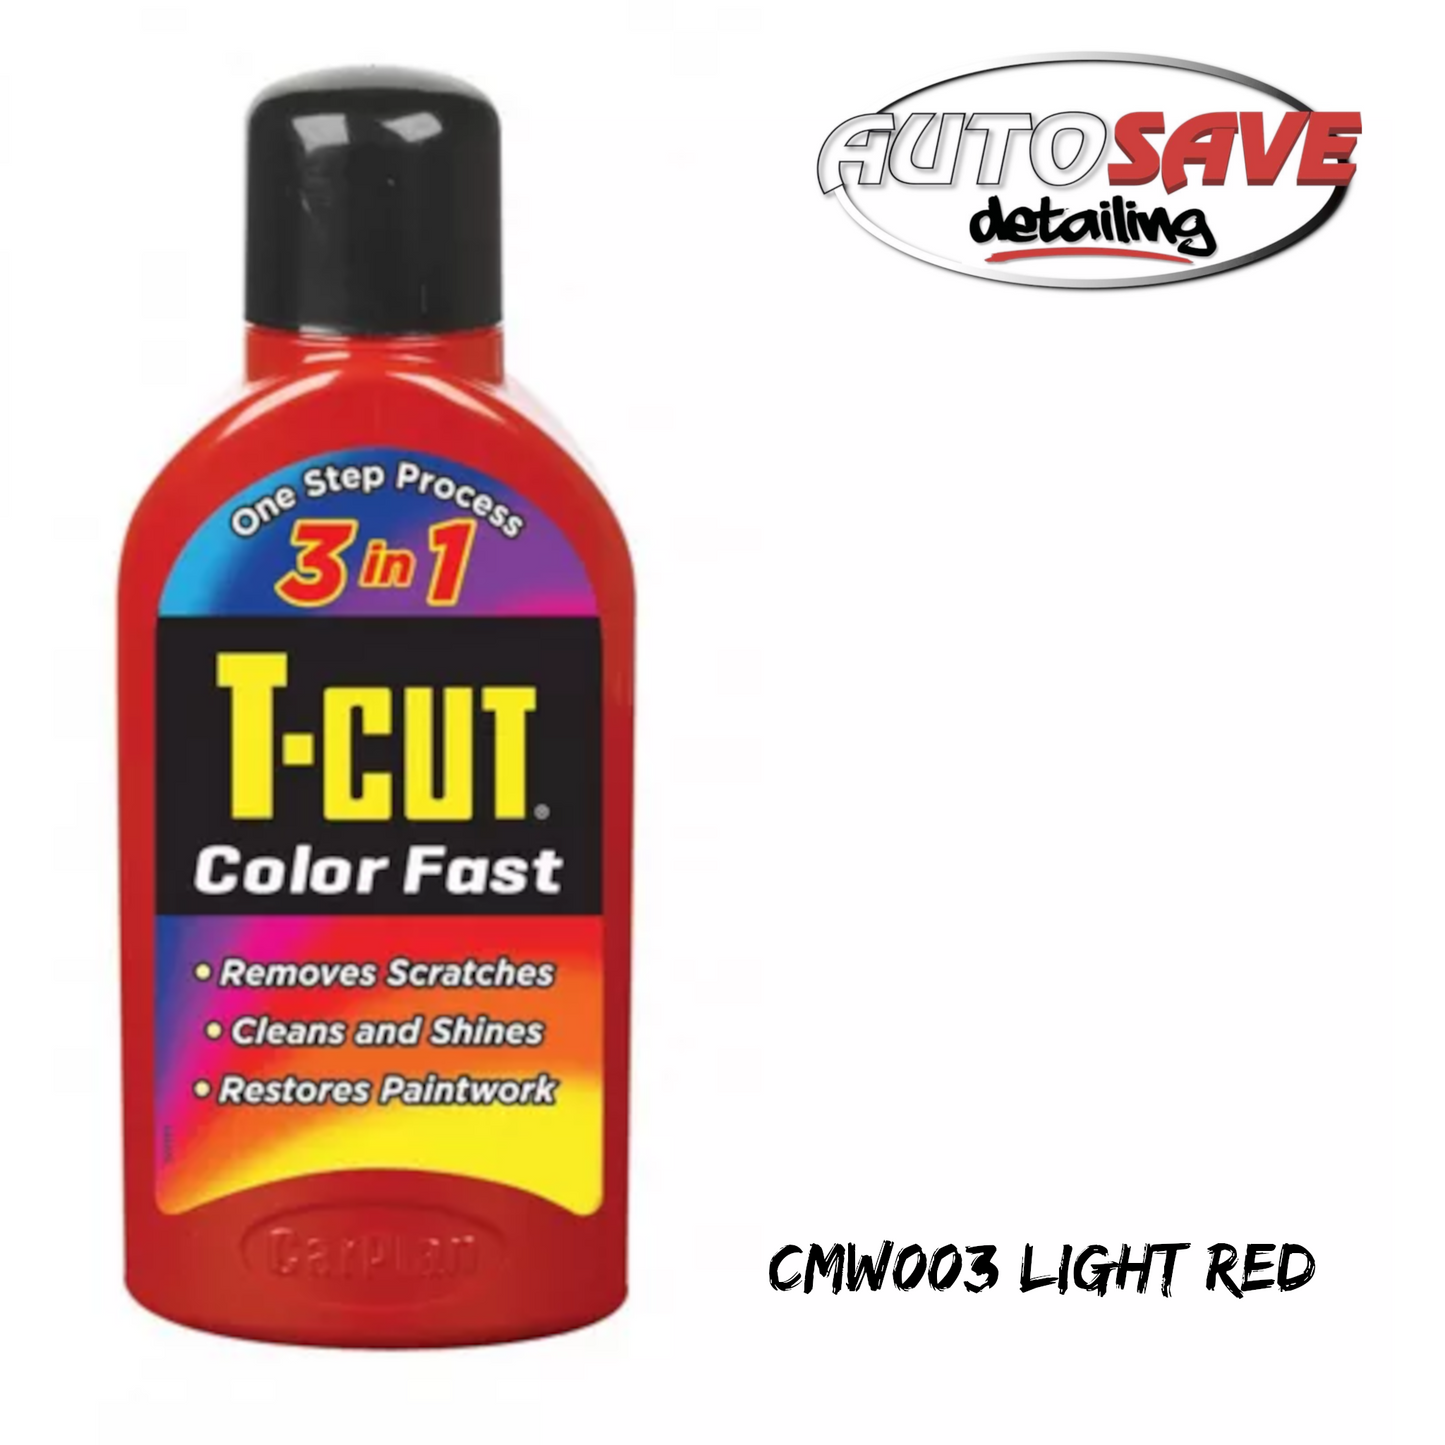 T-CUT  Color Fast Light Red Colour Polish Scratch Remover Clean Shine  Restores